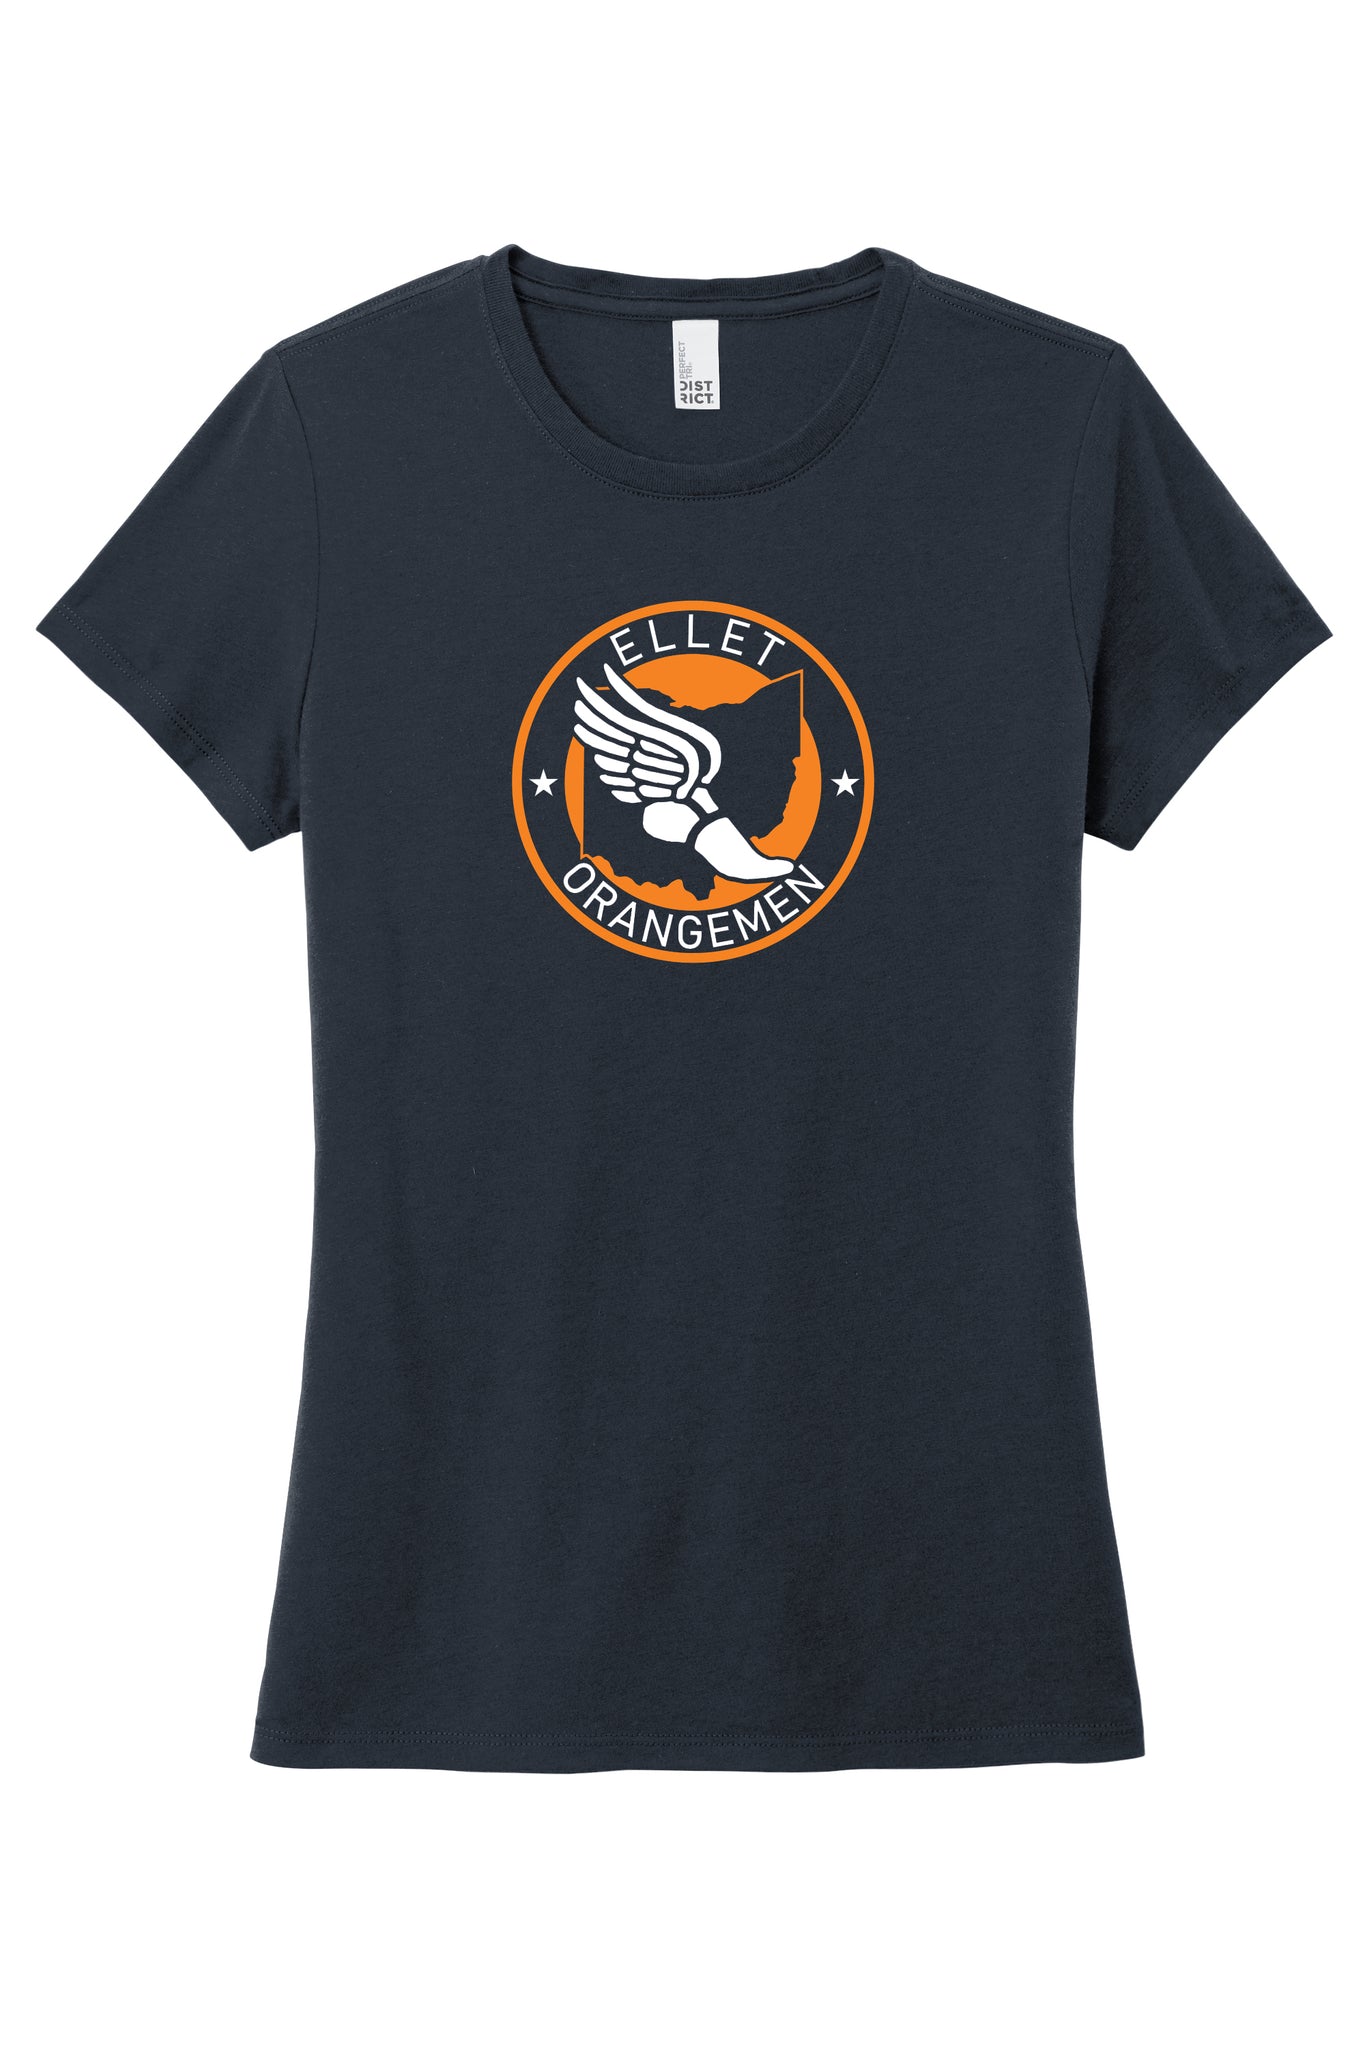 Ellet Orangemen Track Women's Tee Shirt